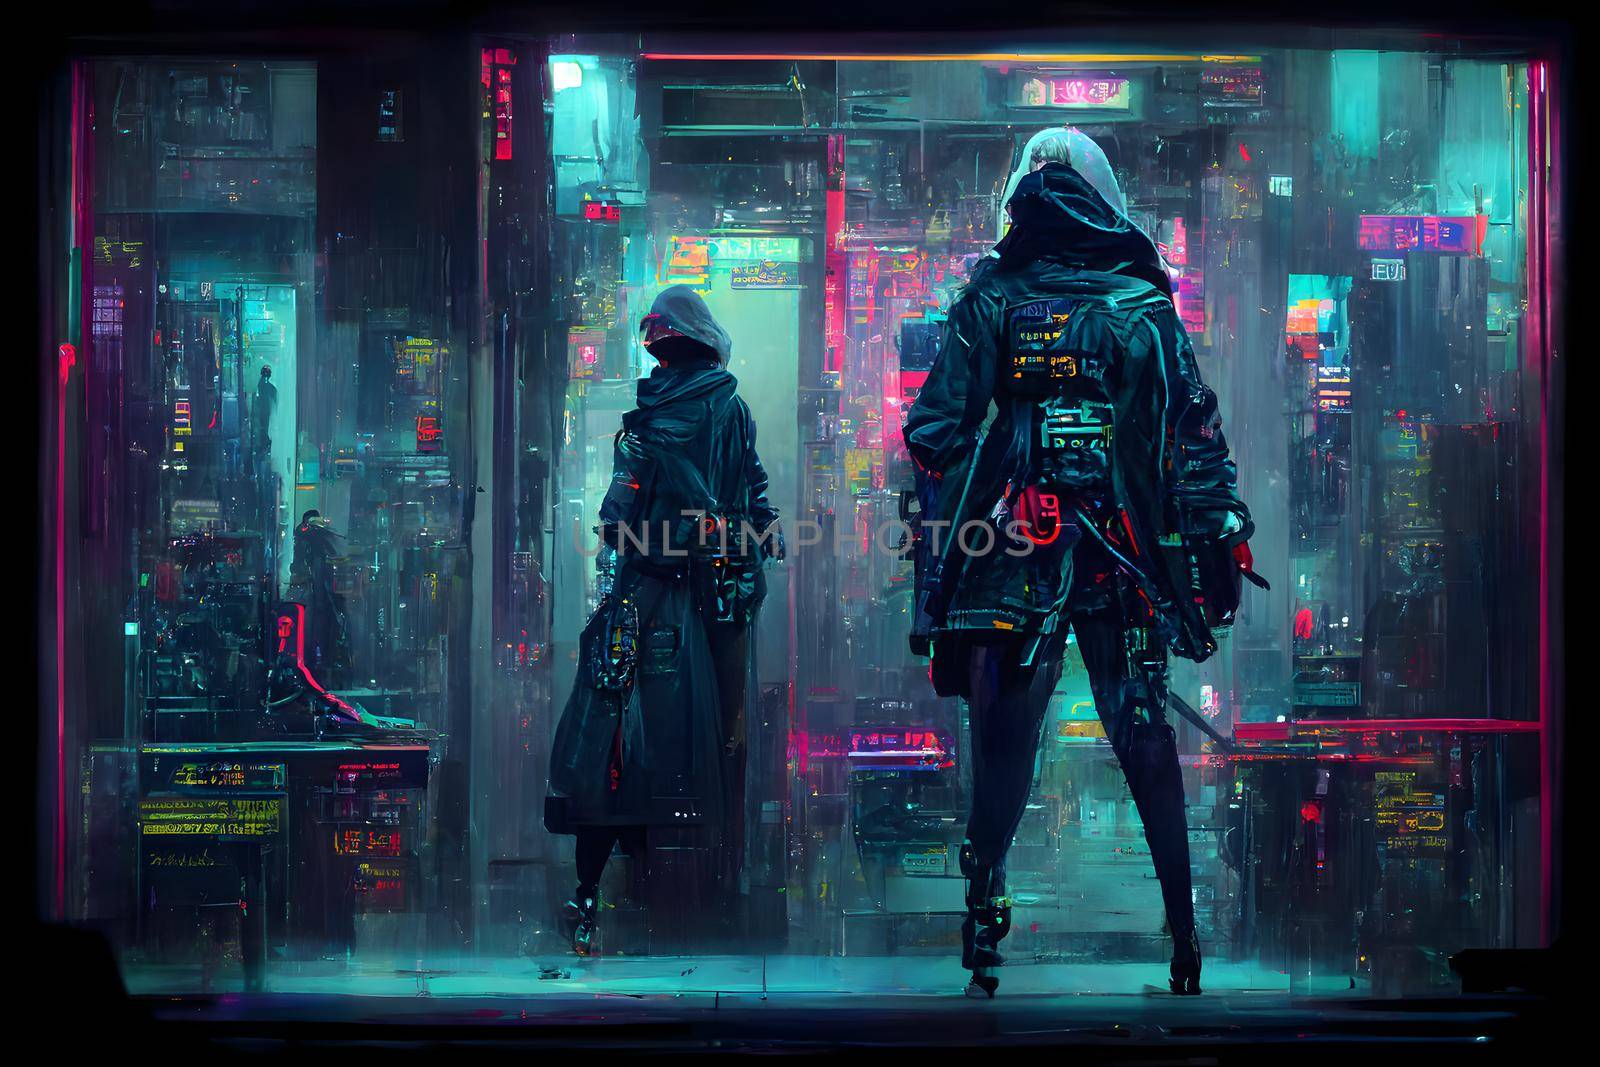 cyberpunk assasin figure in night cyberpunk style neon illuminated city environment, neural network generated art by z1b